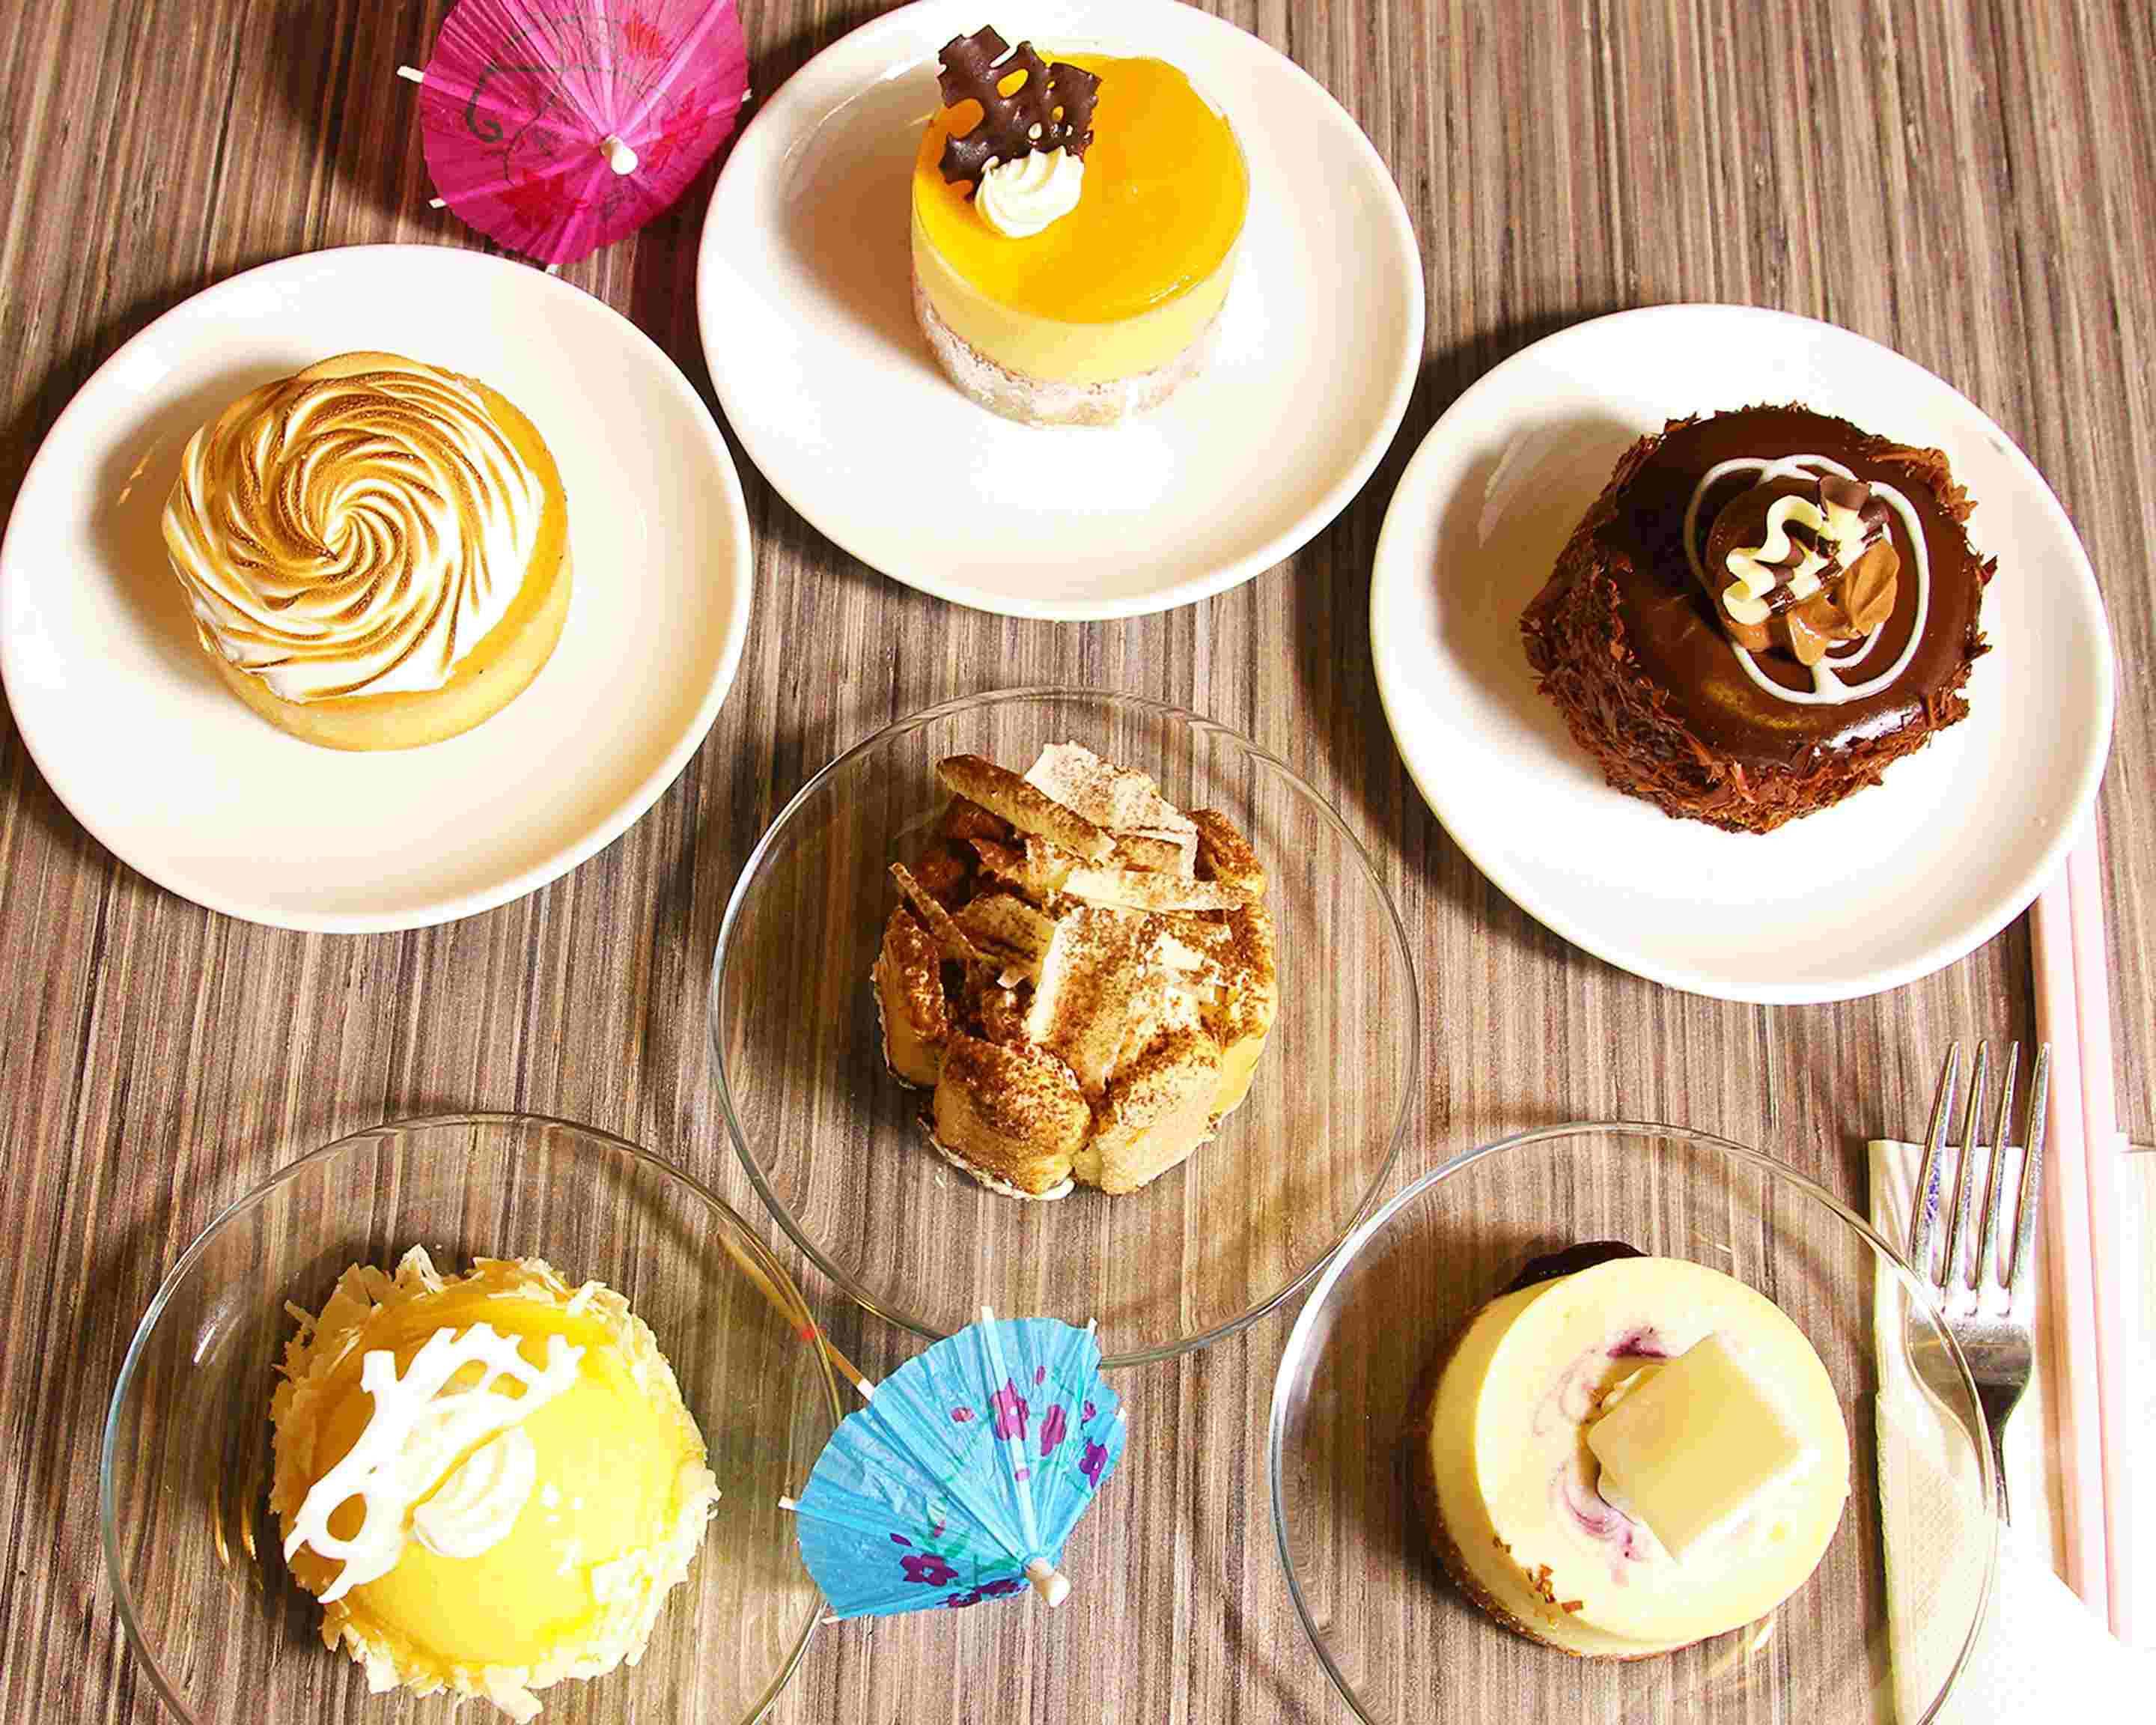 Chick Boss Cake | Dessert Delivery | The #1 Bakery & Dessert Spot